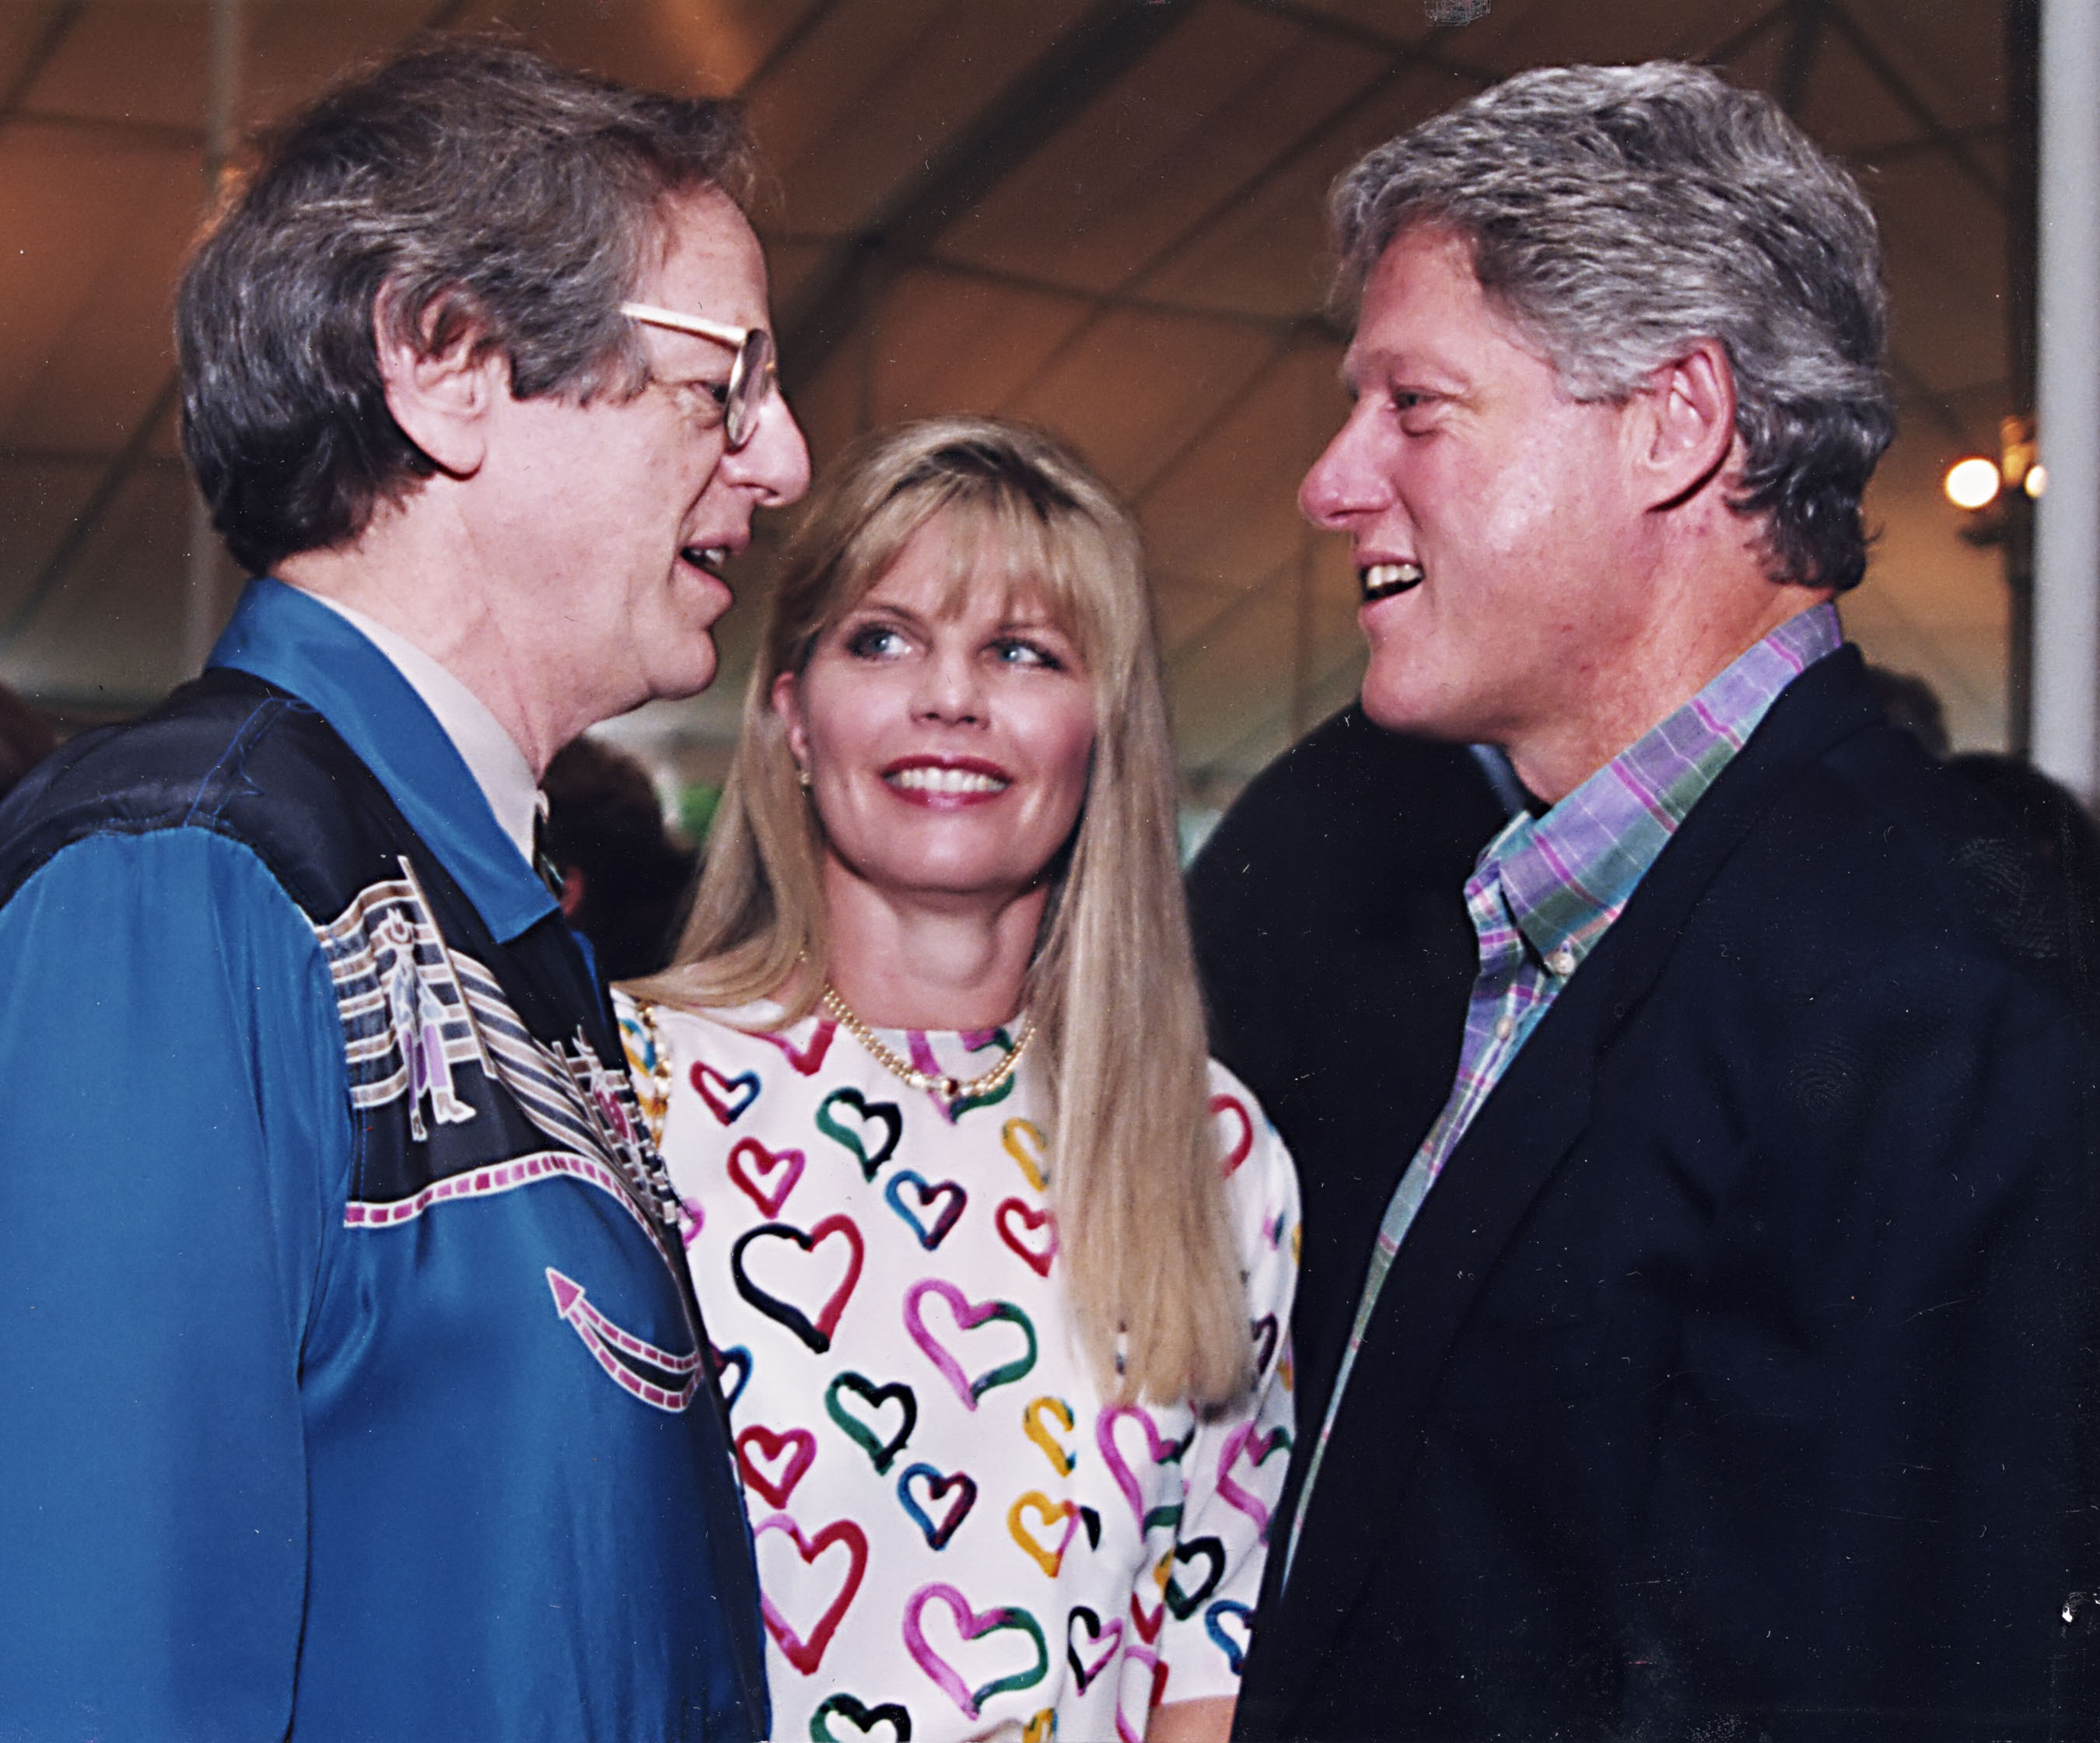 Ken Kragen and President Bill Clinton. (PRNewsFoto/CDO Summit) (PRNewsFoto/CDO SUMMIT)